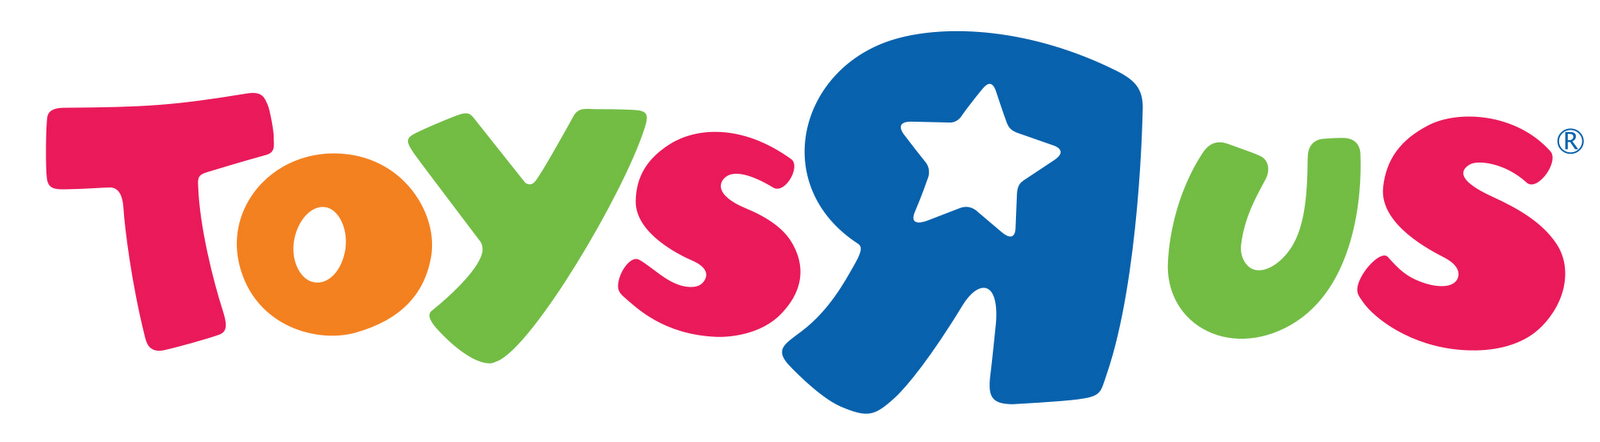 Image result for toys r us logo